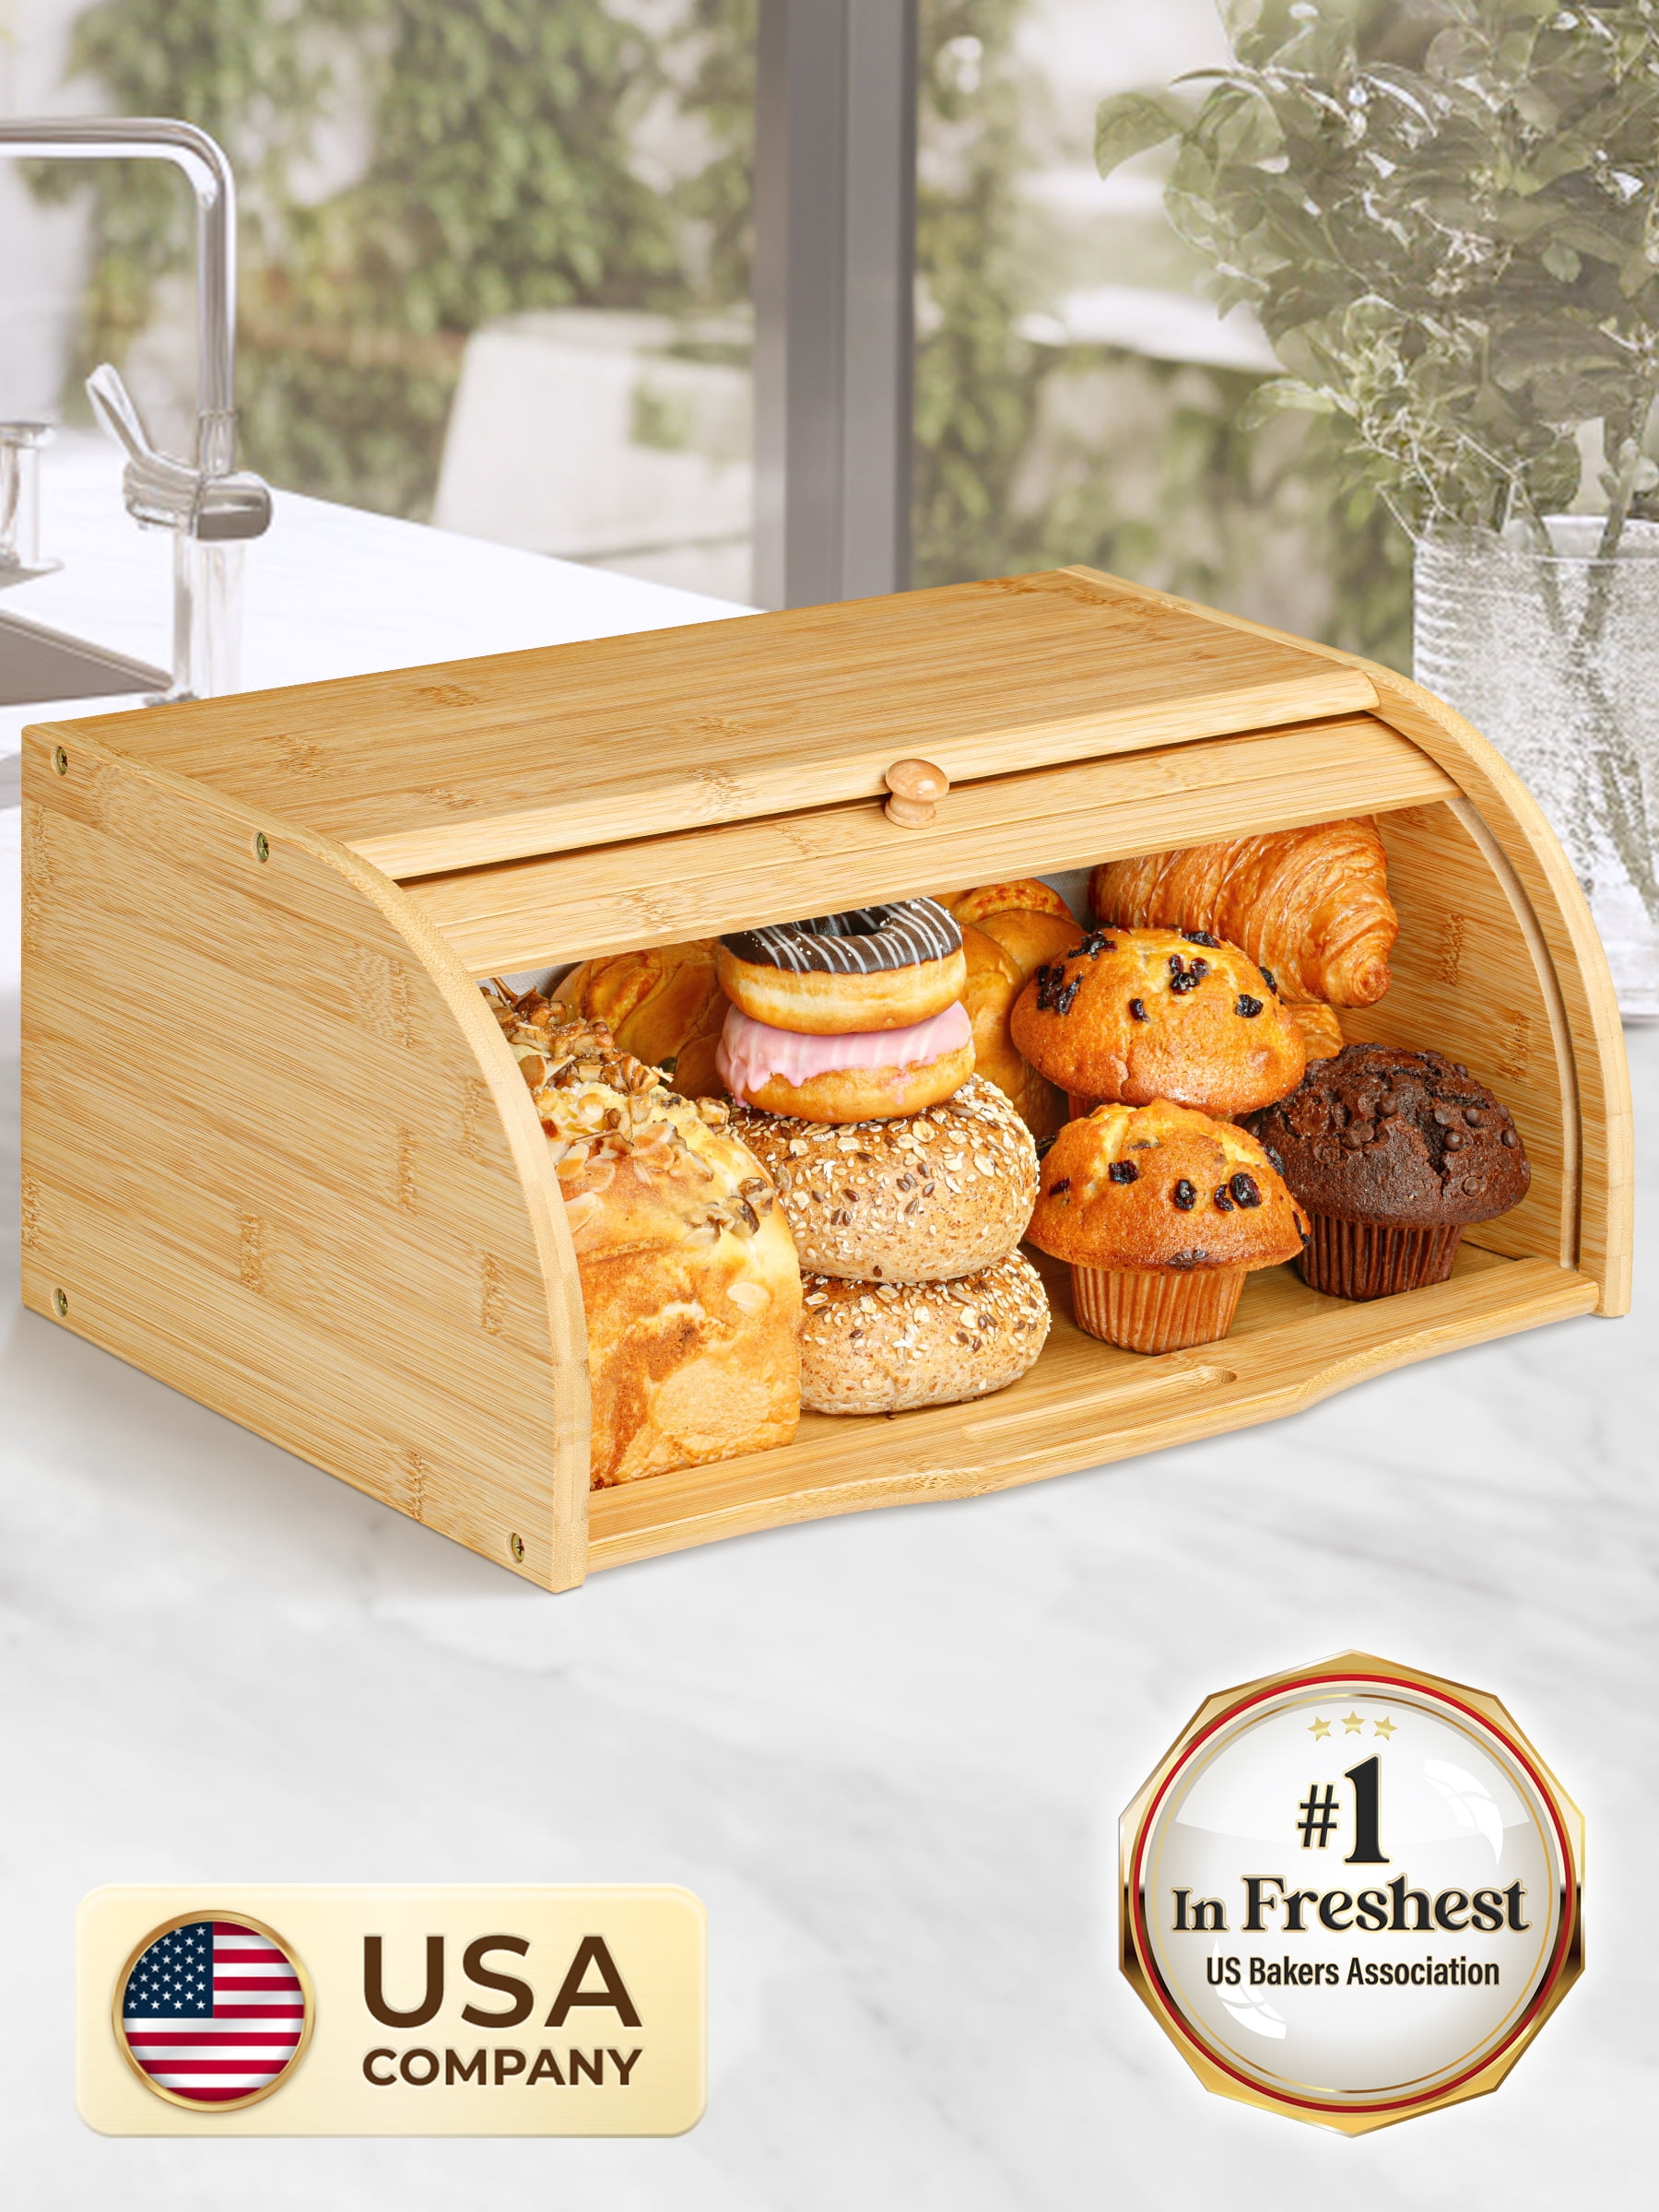 Homekoko Double Oversized Bread Box Two-layer Extra Large